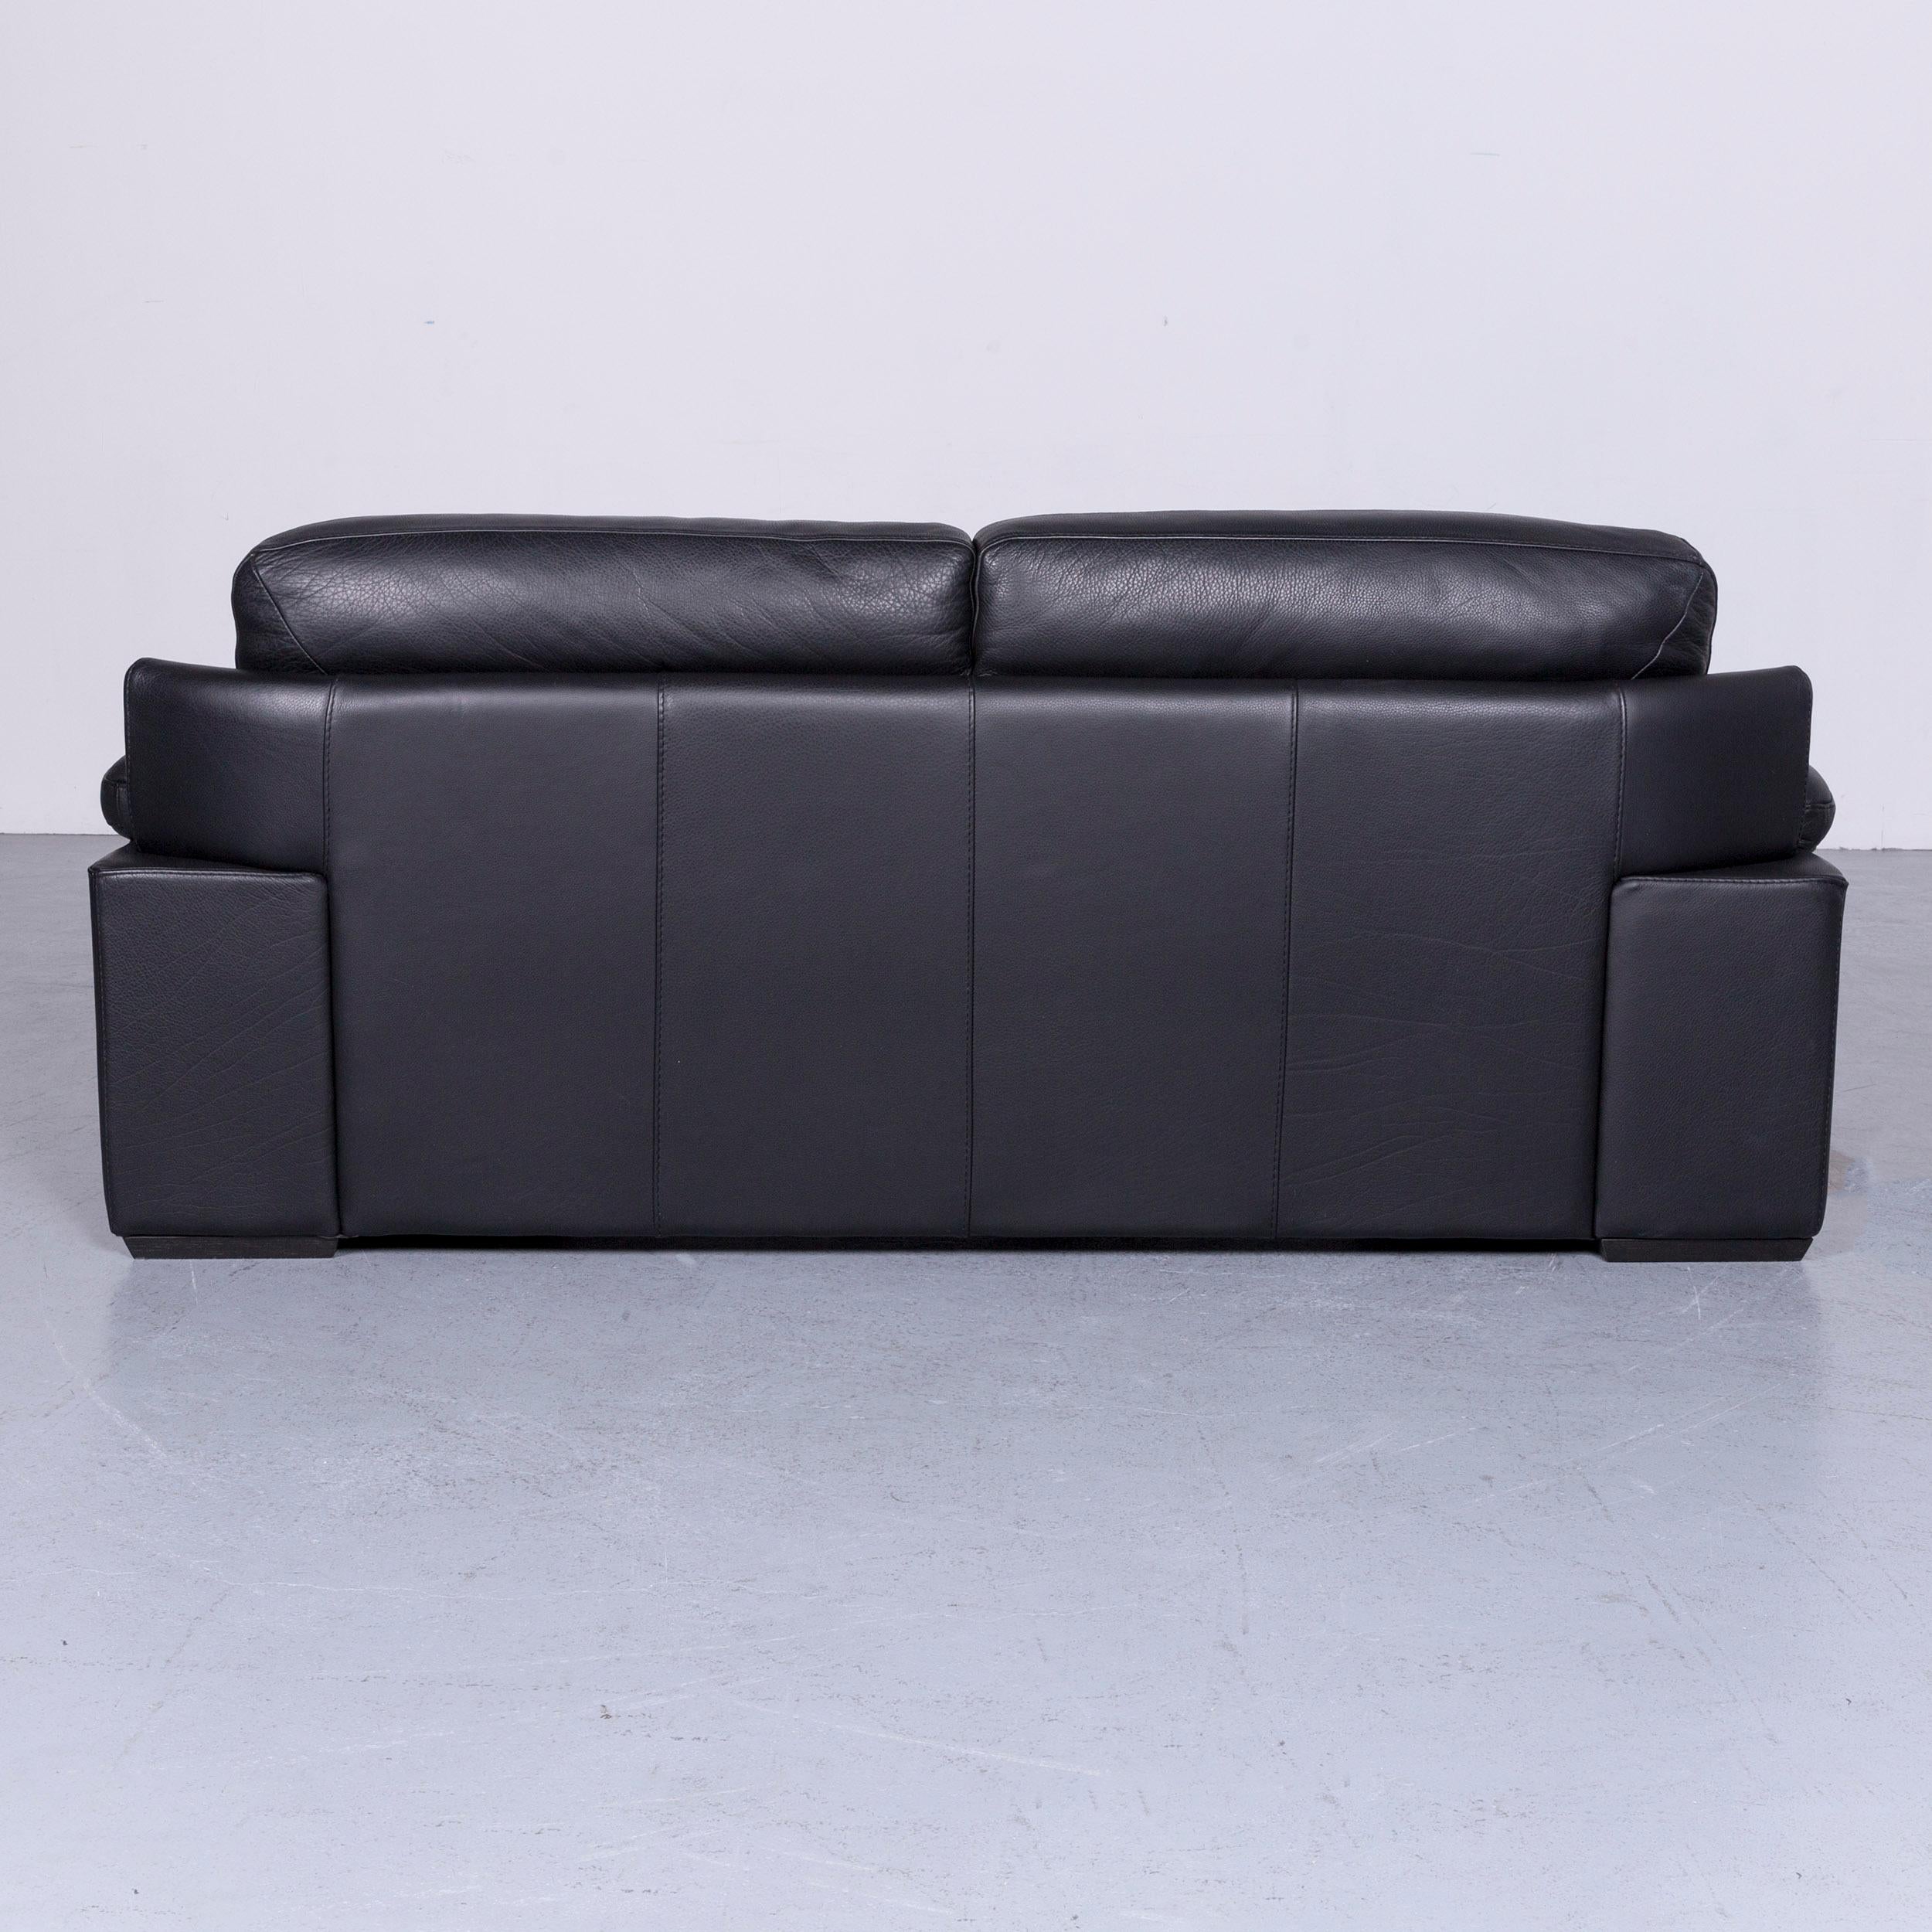 Natuzzi Designer Leather Three-Seat Sofa Couch in Black 4